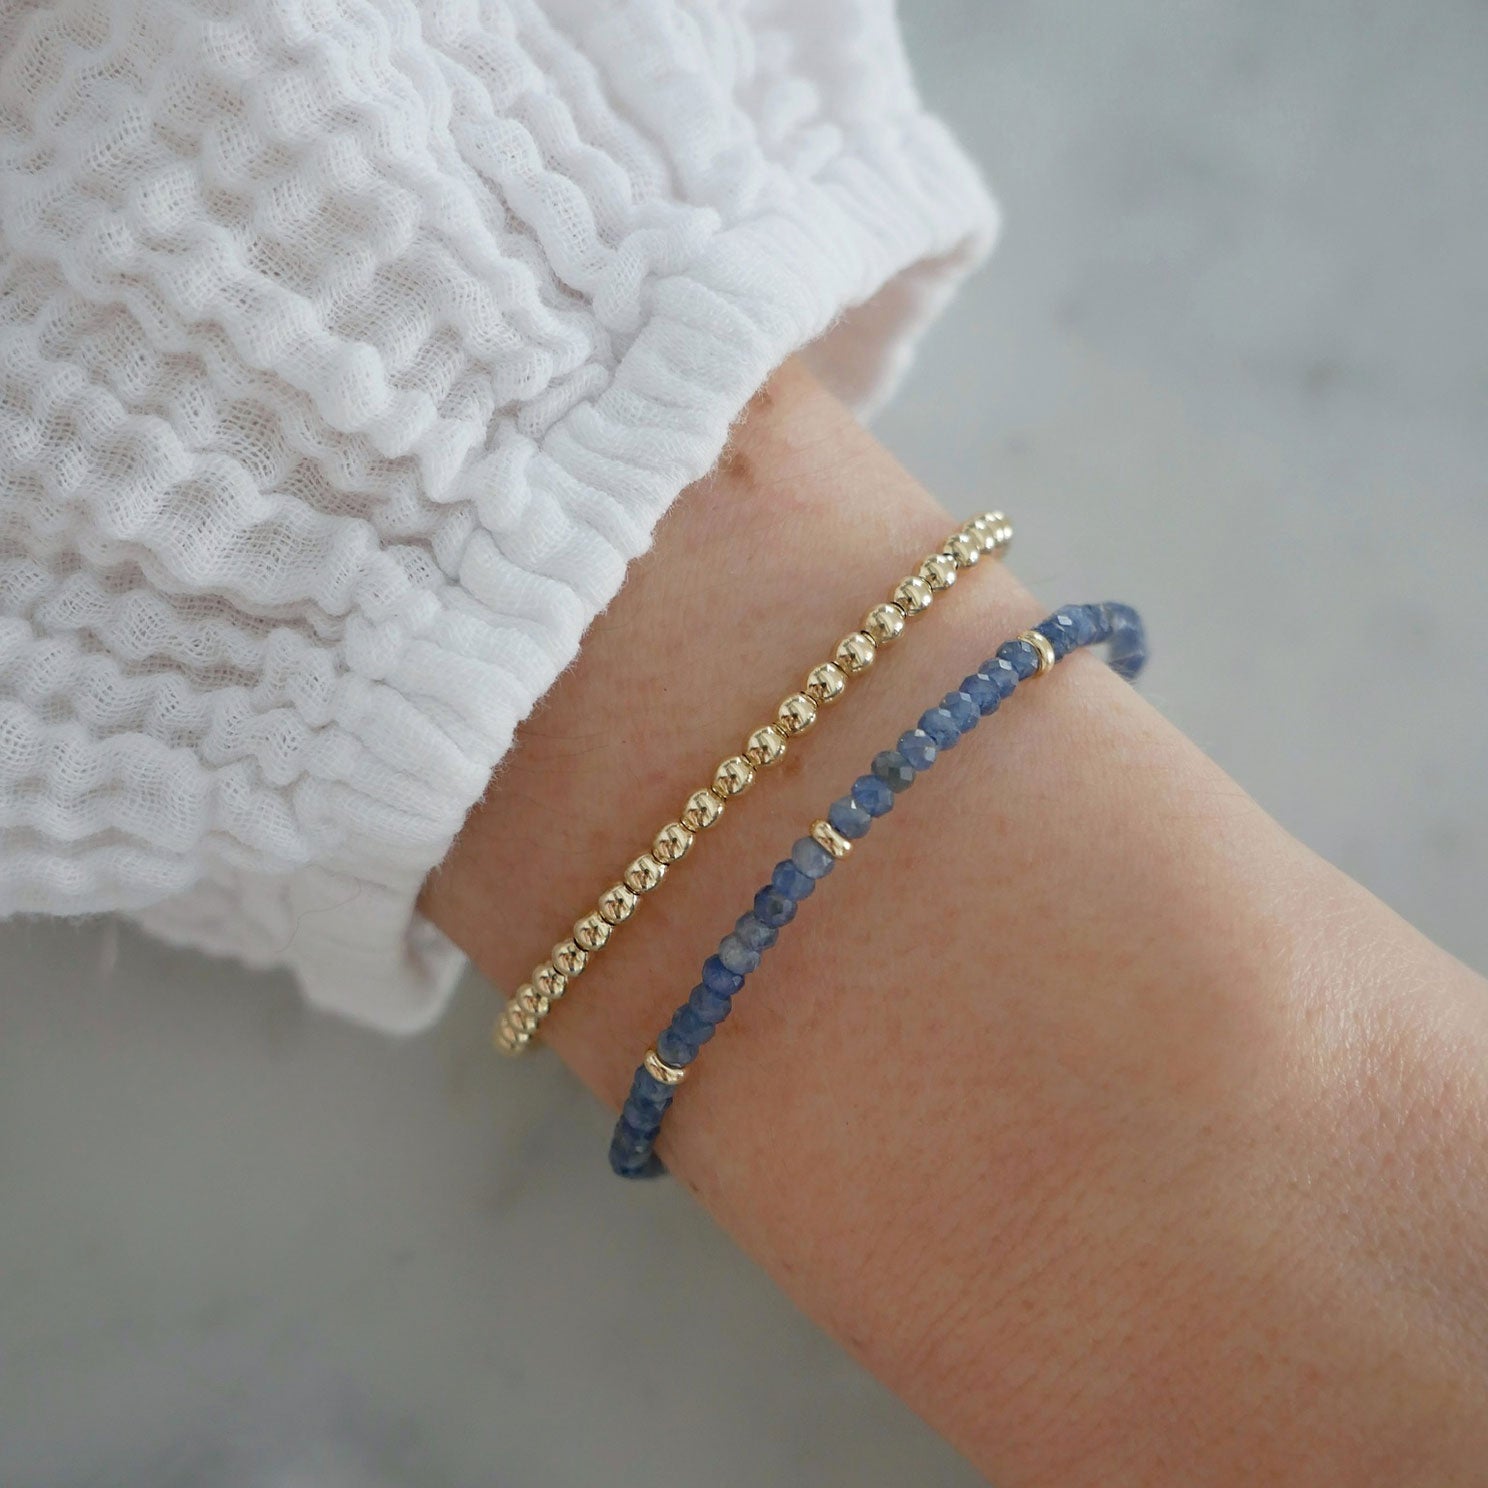 Birthstone Bead Bracelet In Blue Sapphire styled on wrist of model with gold ball bracelet wearing white sleeve